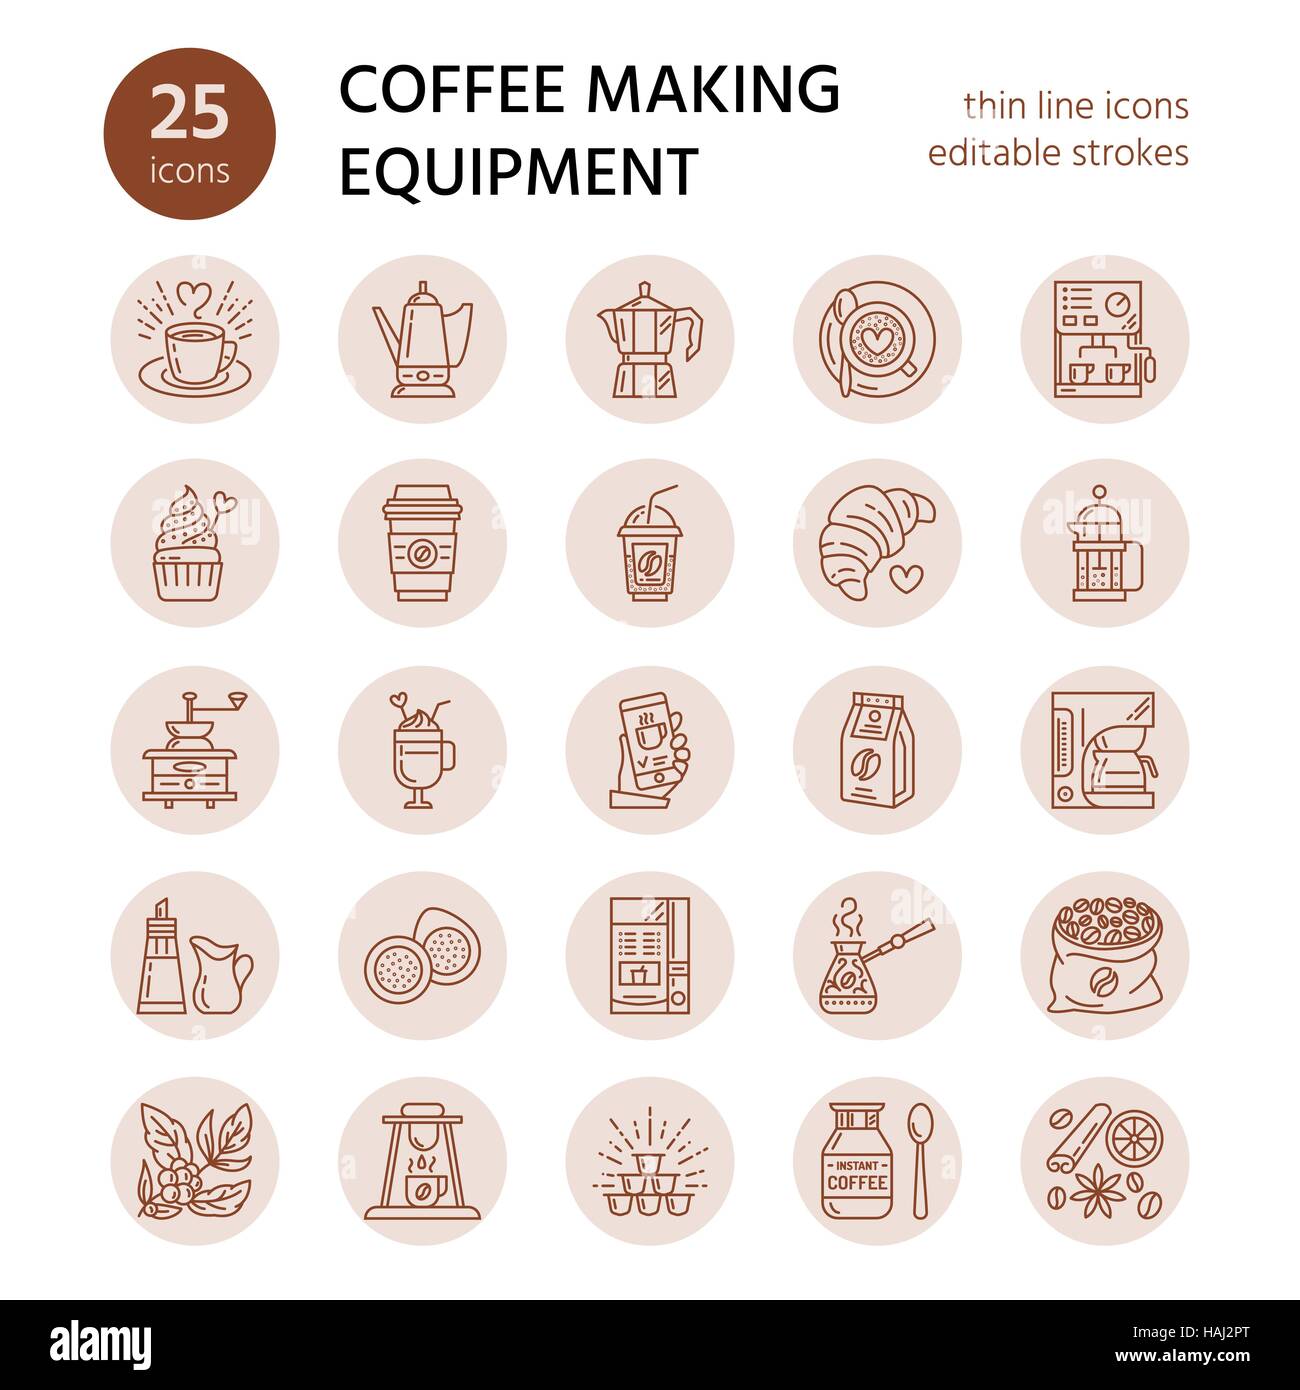 https://c8.alamy.com/comp/HAJ2PT/vector-line-icons-of-coffee-making-equipment-elements-moka-pot-french-HAJ2PT.jpg